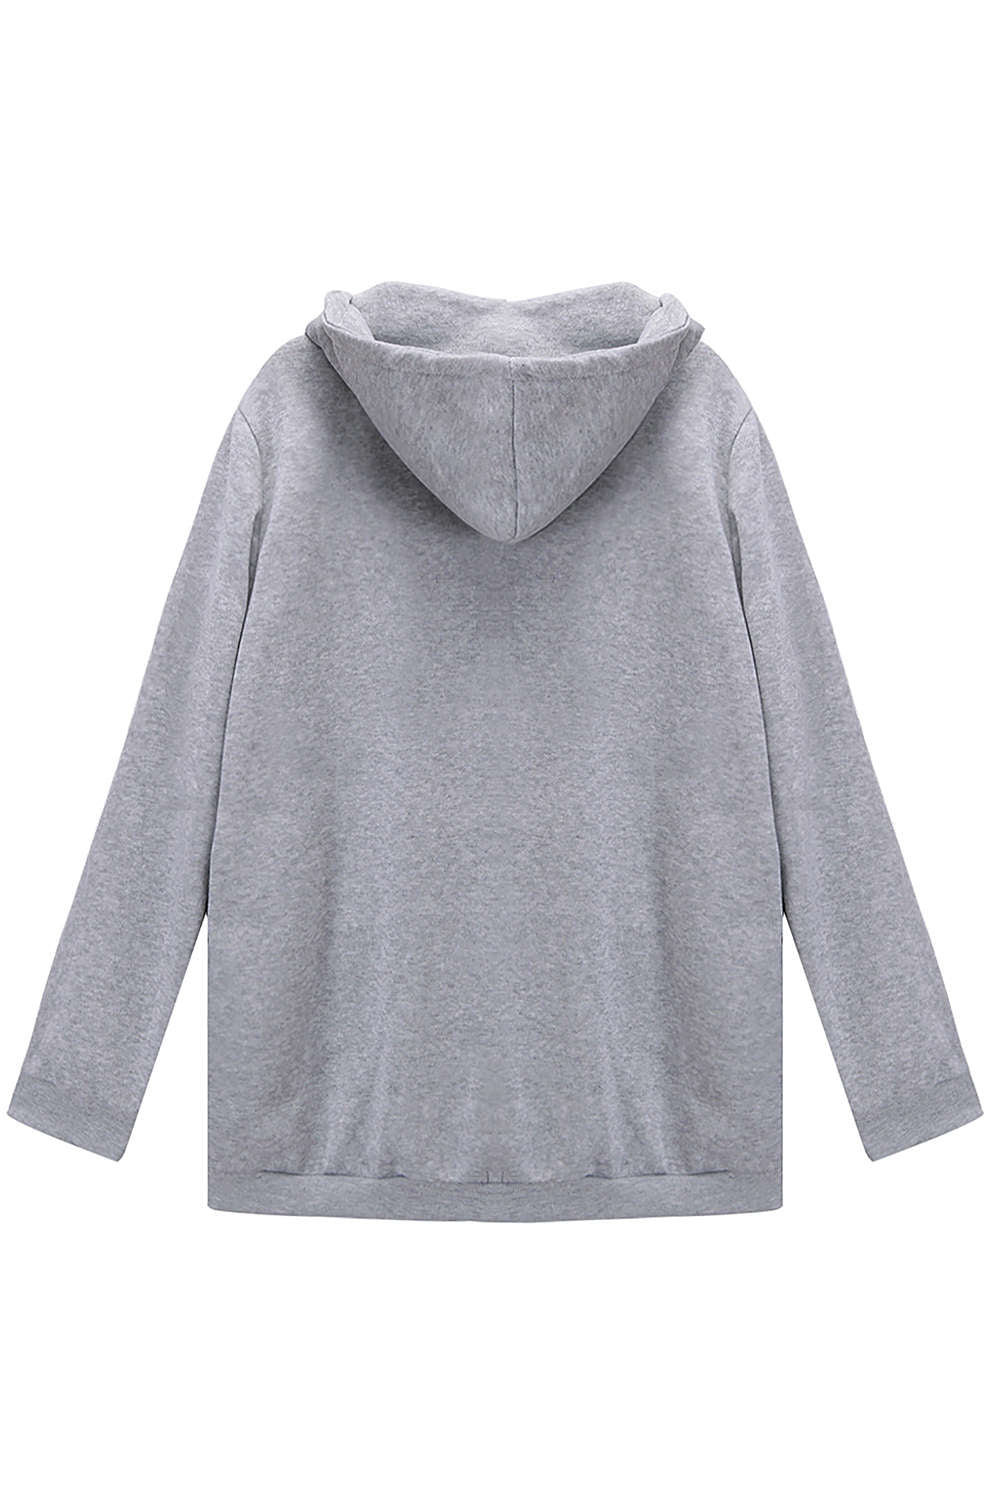 Iyasson Women Hoodie Coat Long Sleeve Jumper Sweatershirt